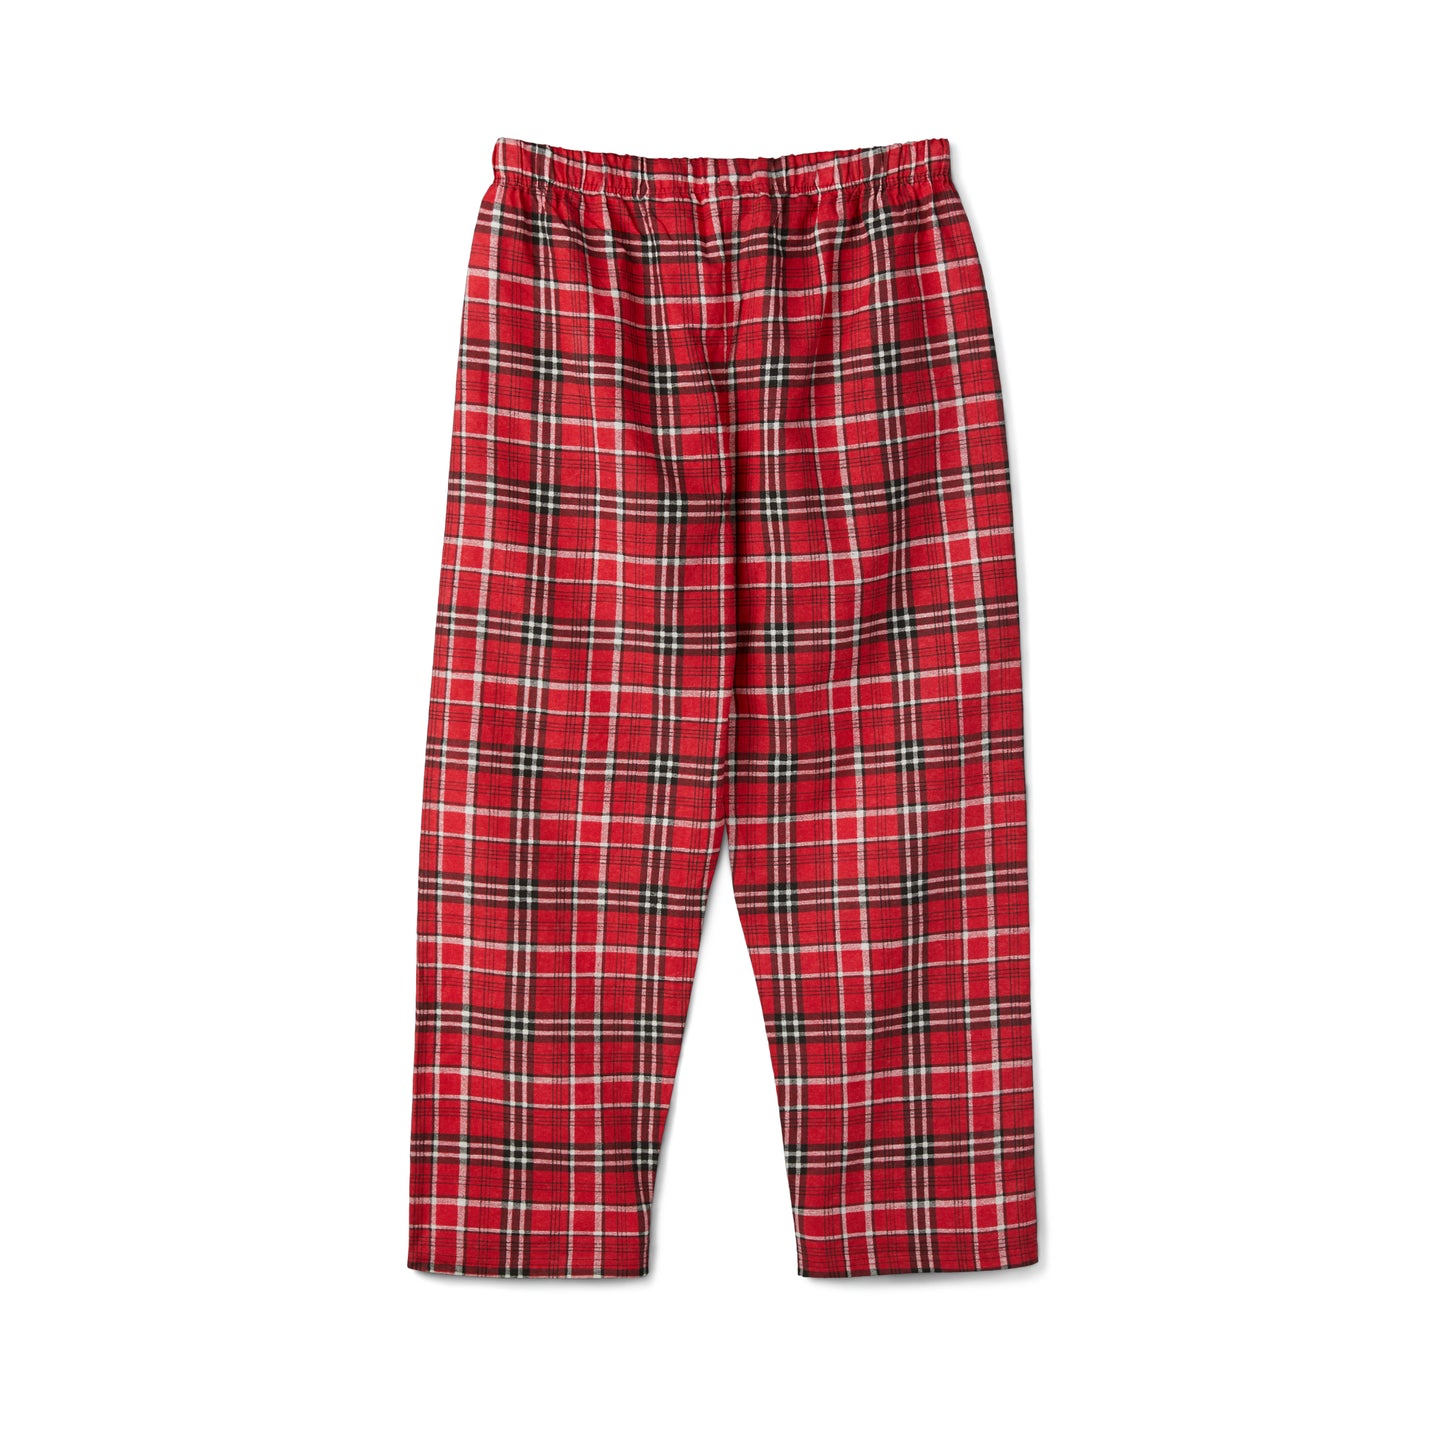 Men's Short Sleeve Pajama Set